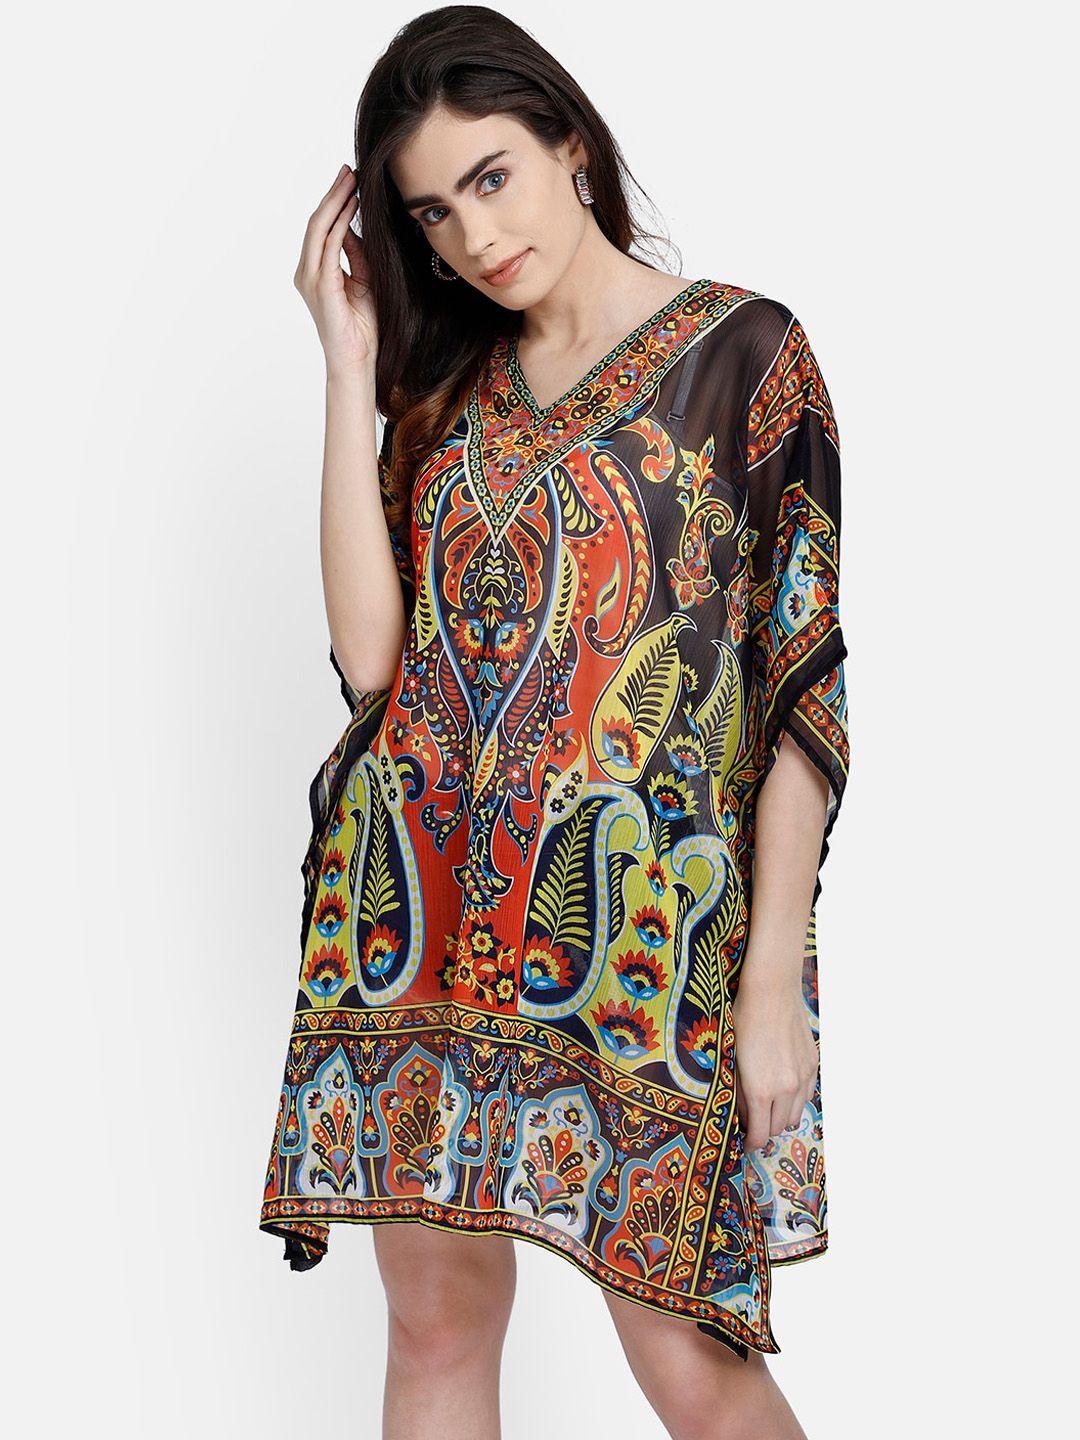 aditi-wasan-multicoloured-ethnic-motifs-kaftan-dress